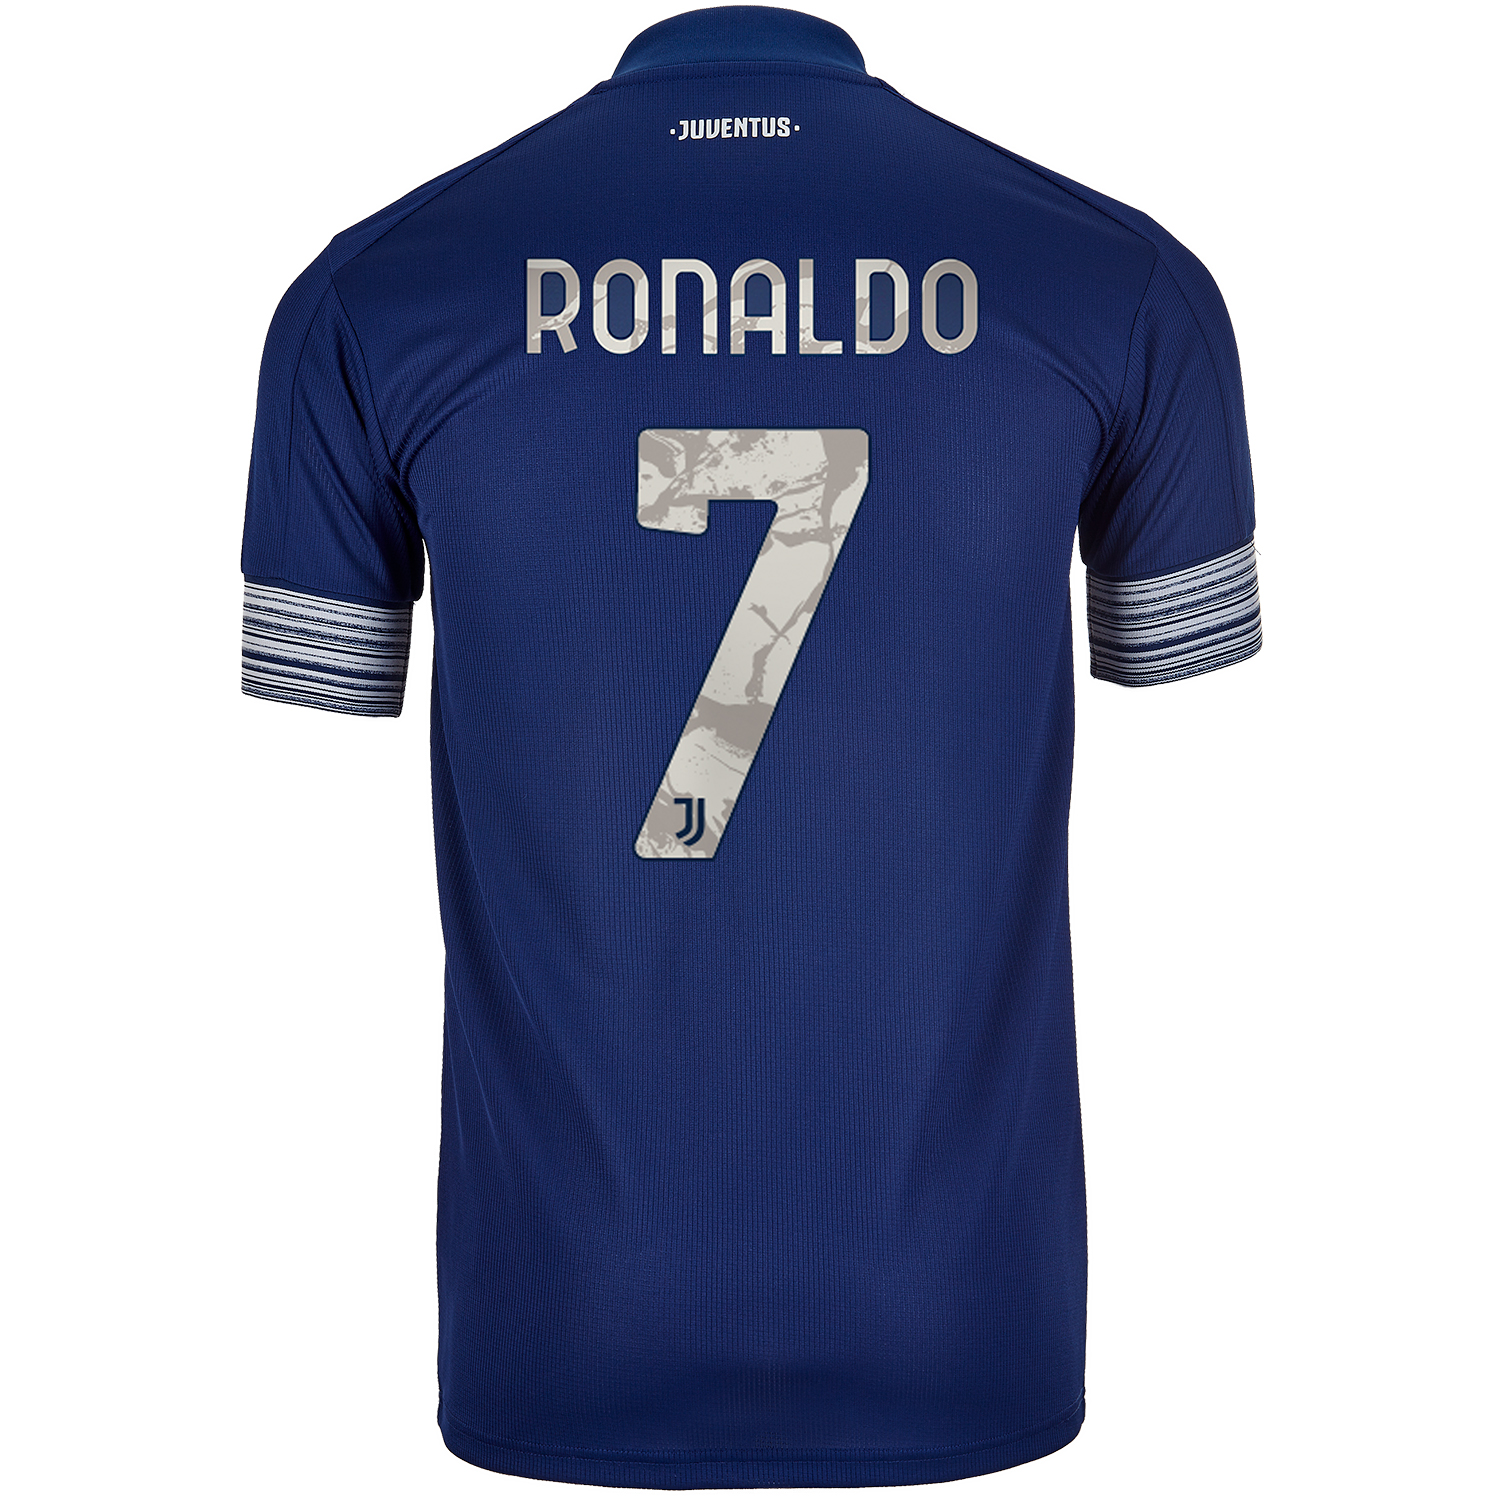 ronaldo 2020 jersey